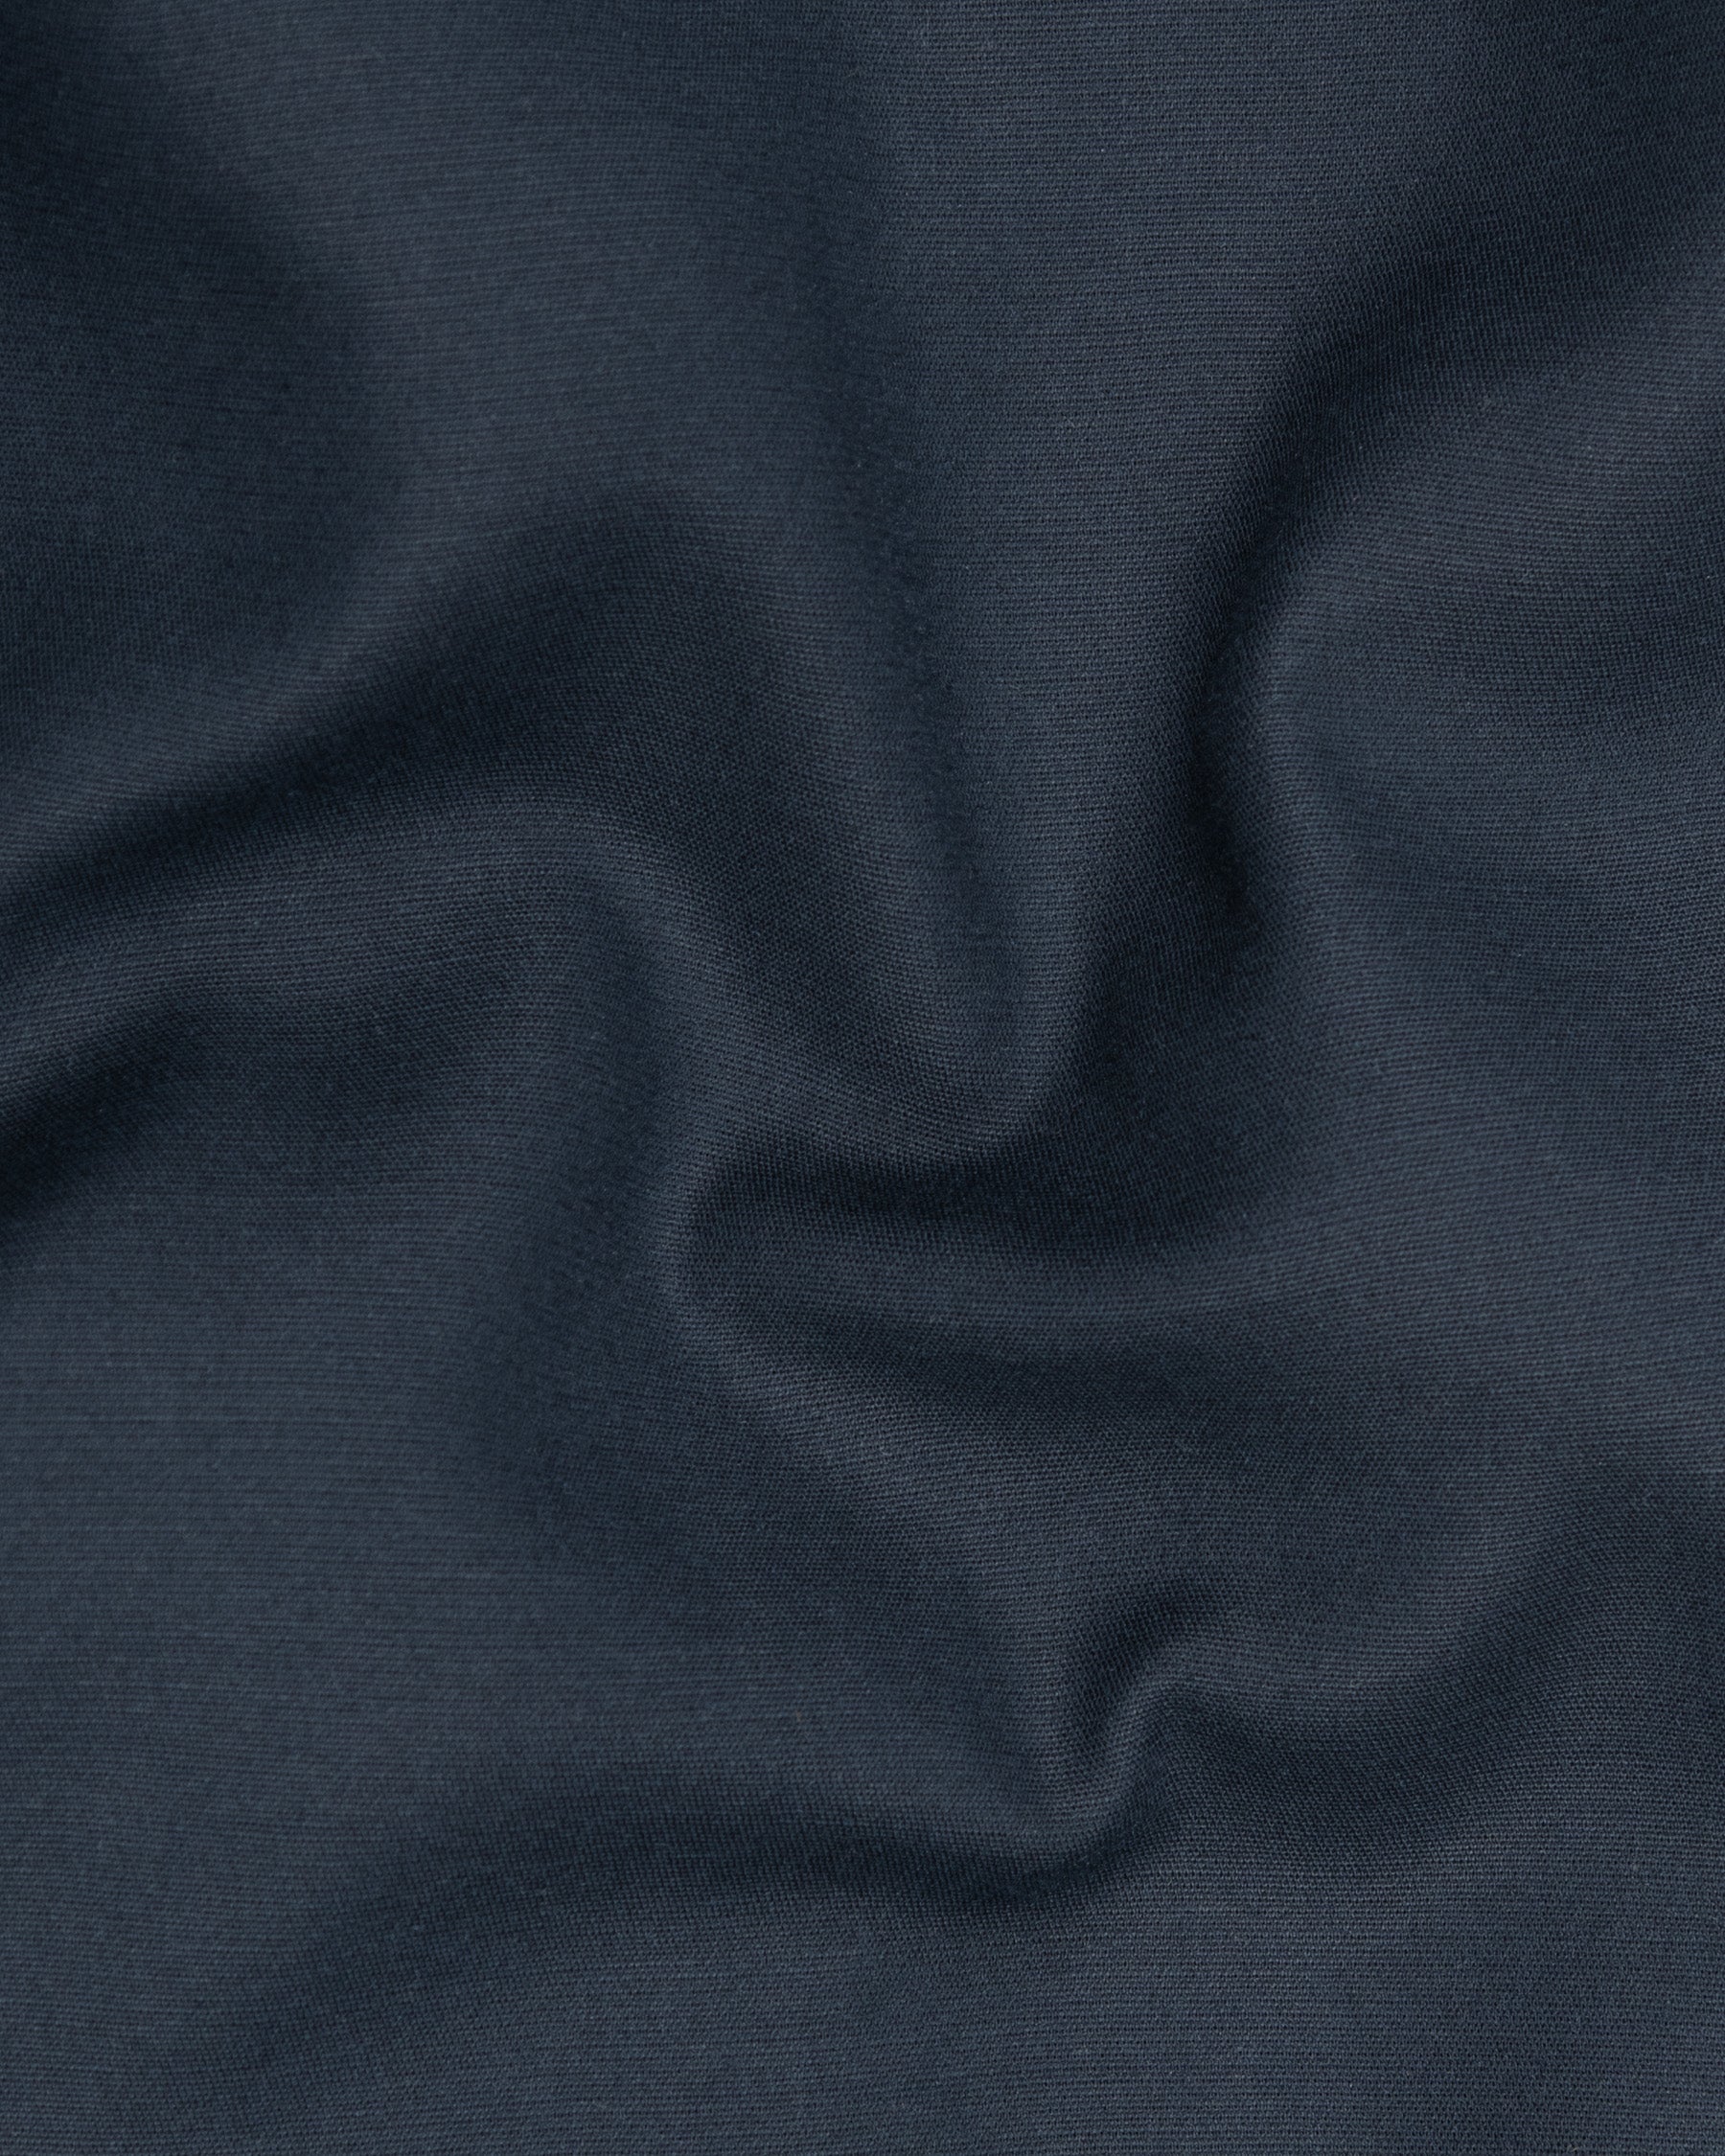 Outer Space Blue Premium Cotton Waistcoat V1294-36, V1294-38, V1294-40, V1294-42, V1294-44, V1294-46, V1294-48, V1294-50, V1294-52, V1294-54, V1294-56, V1294-58, V1294-60